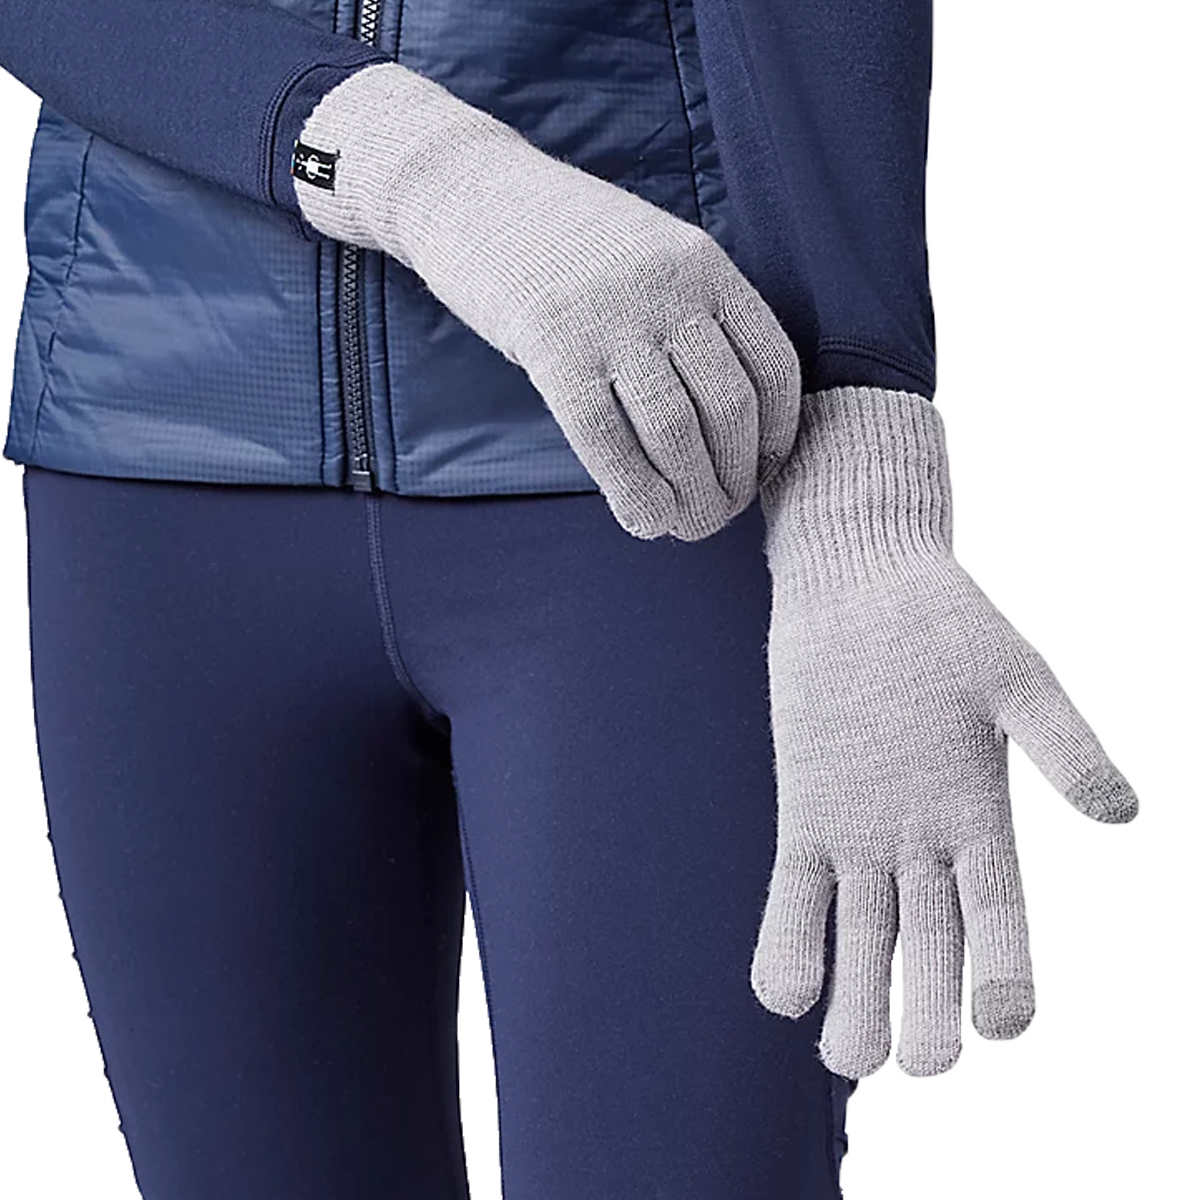 Liner Gloves alternate view